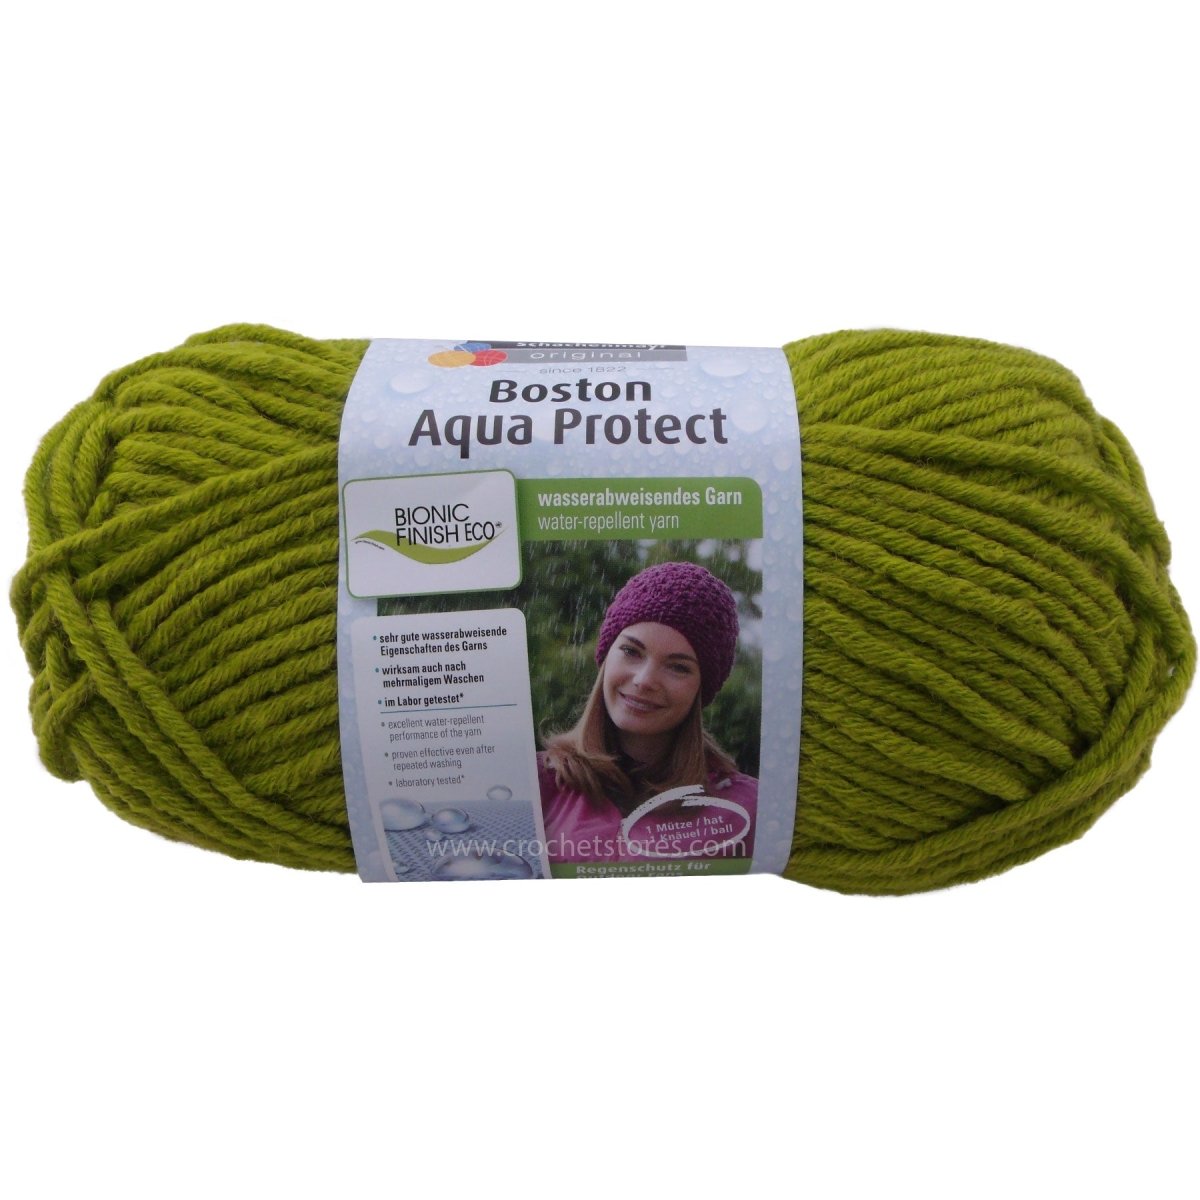 BOSTON AQUA PROTECT - Crochetstores9807791-575